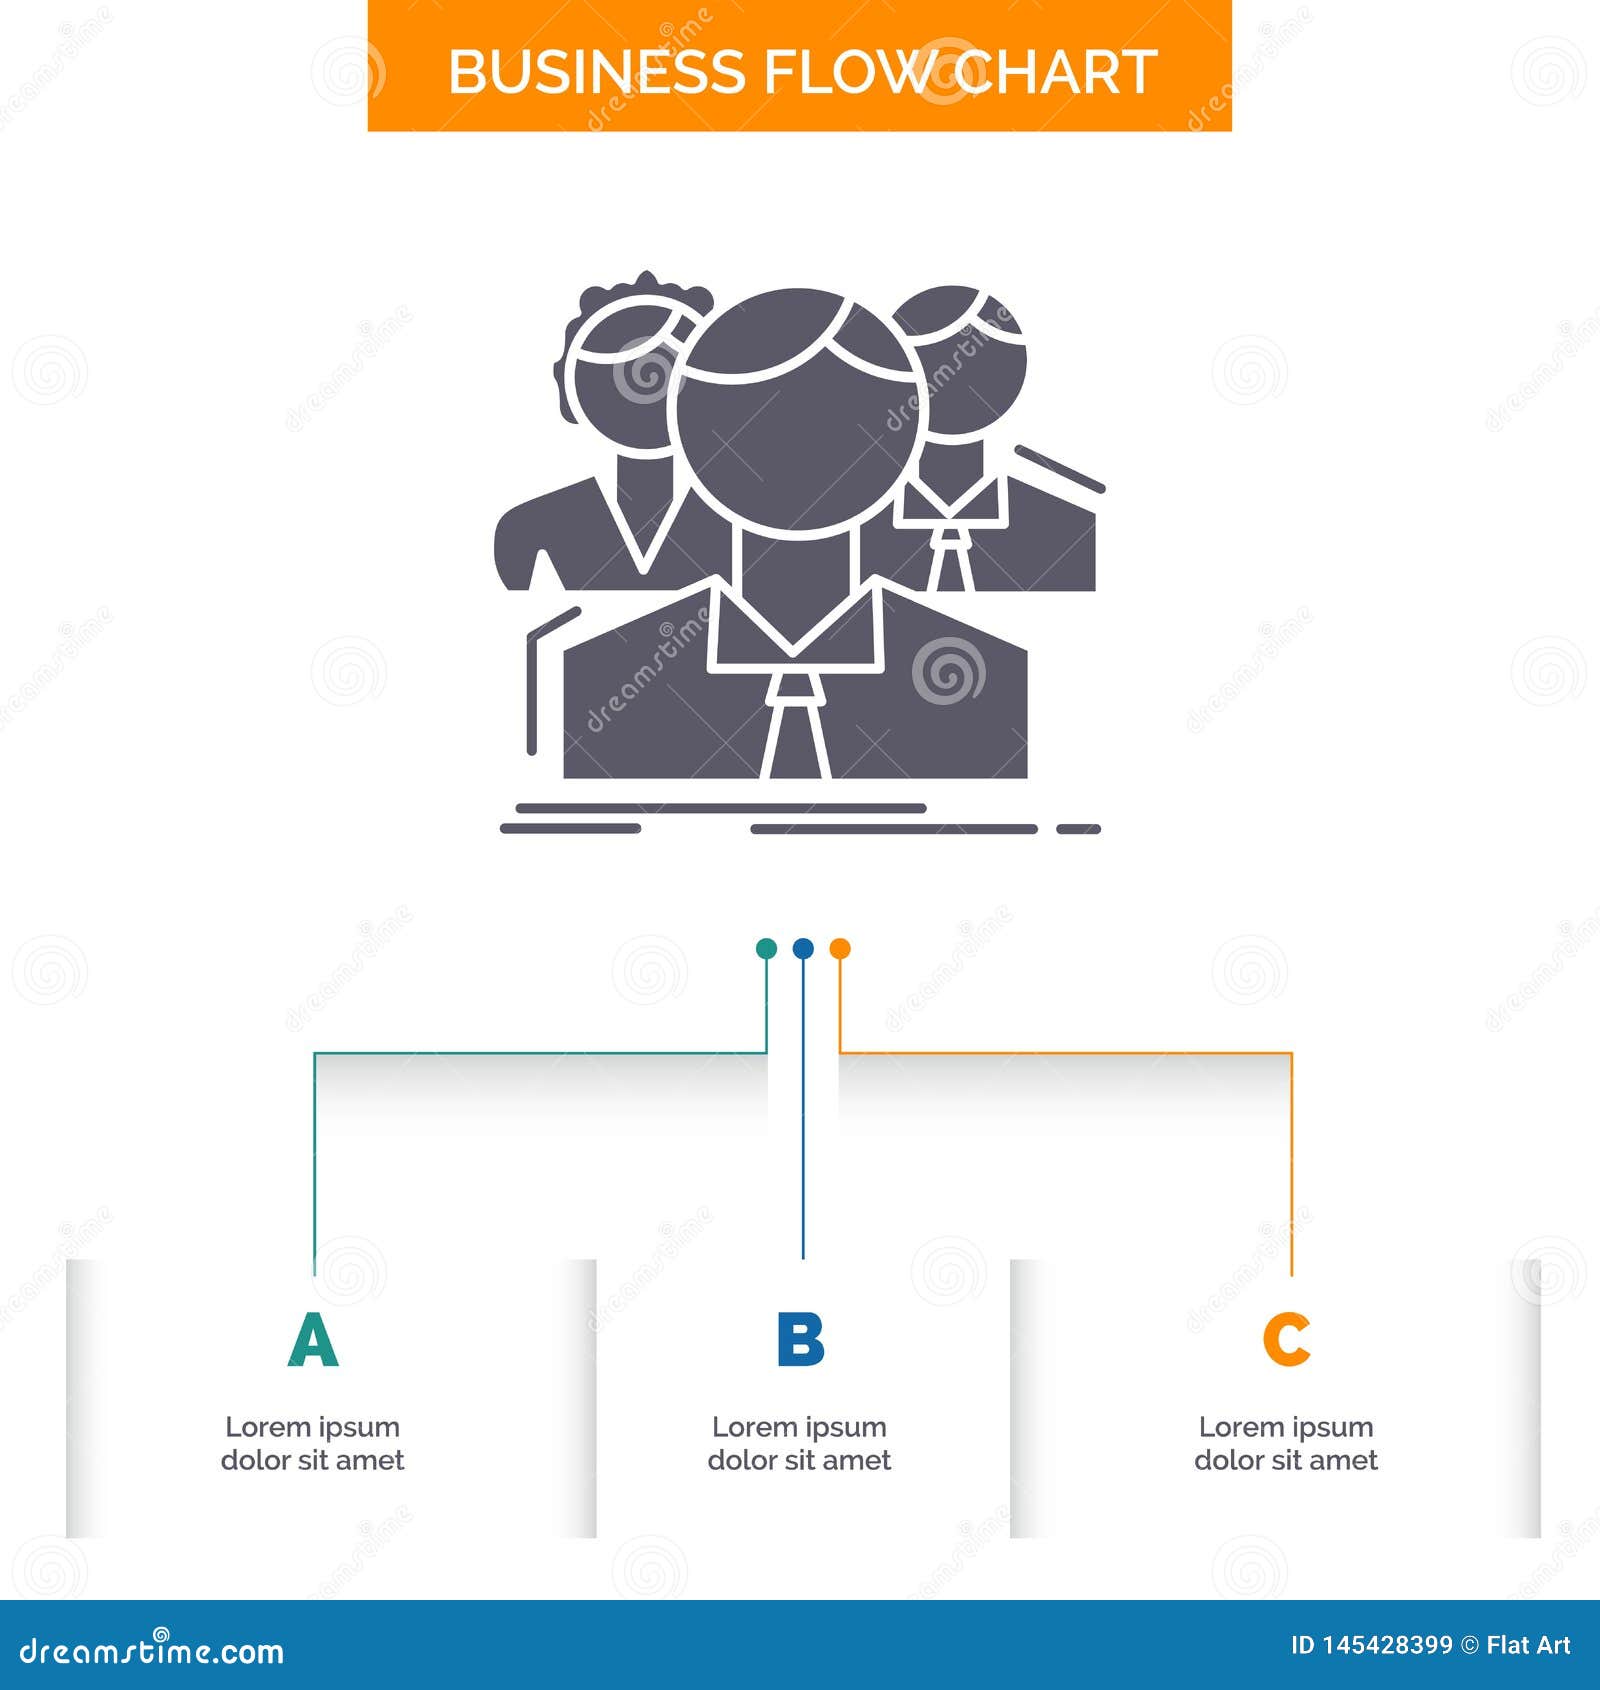 Flow Chart Online Design